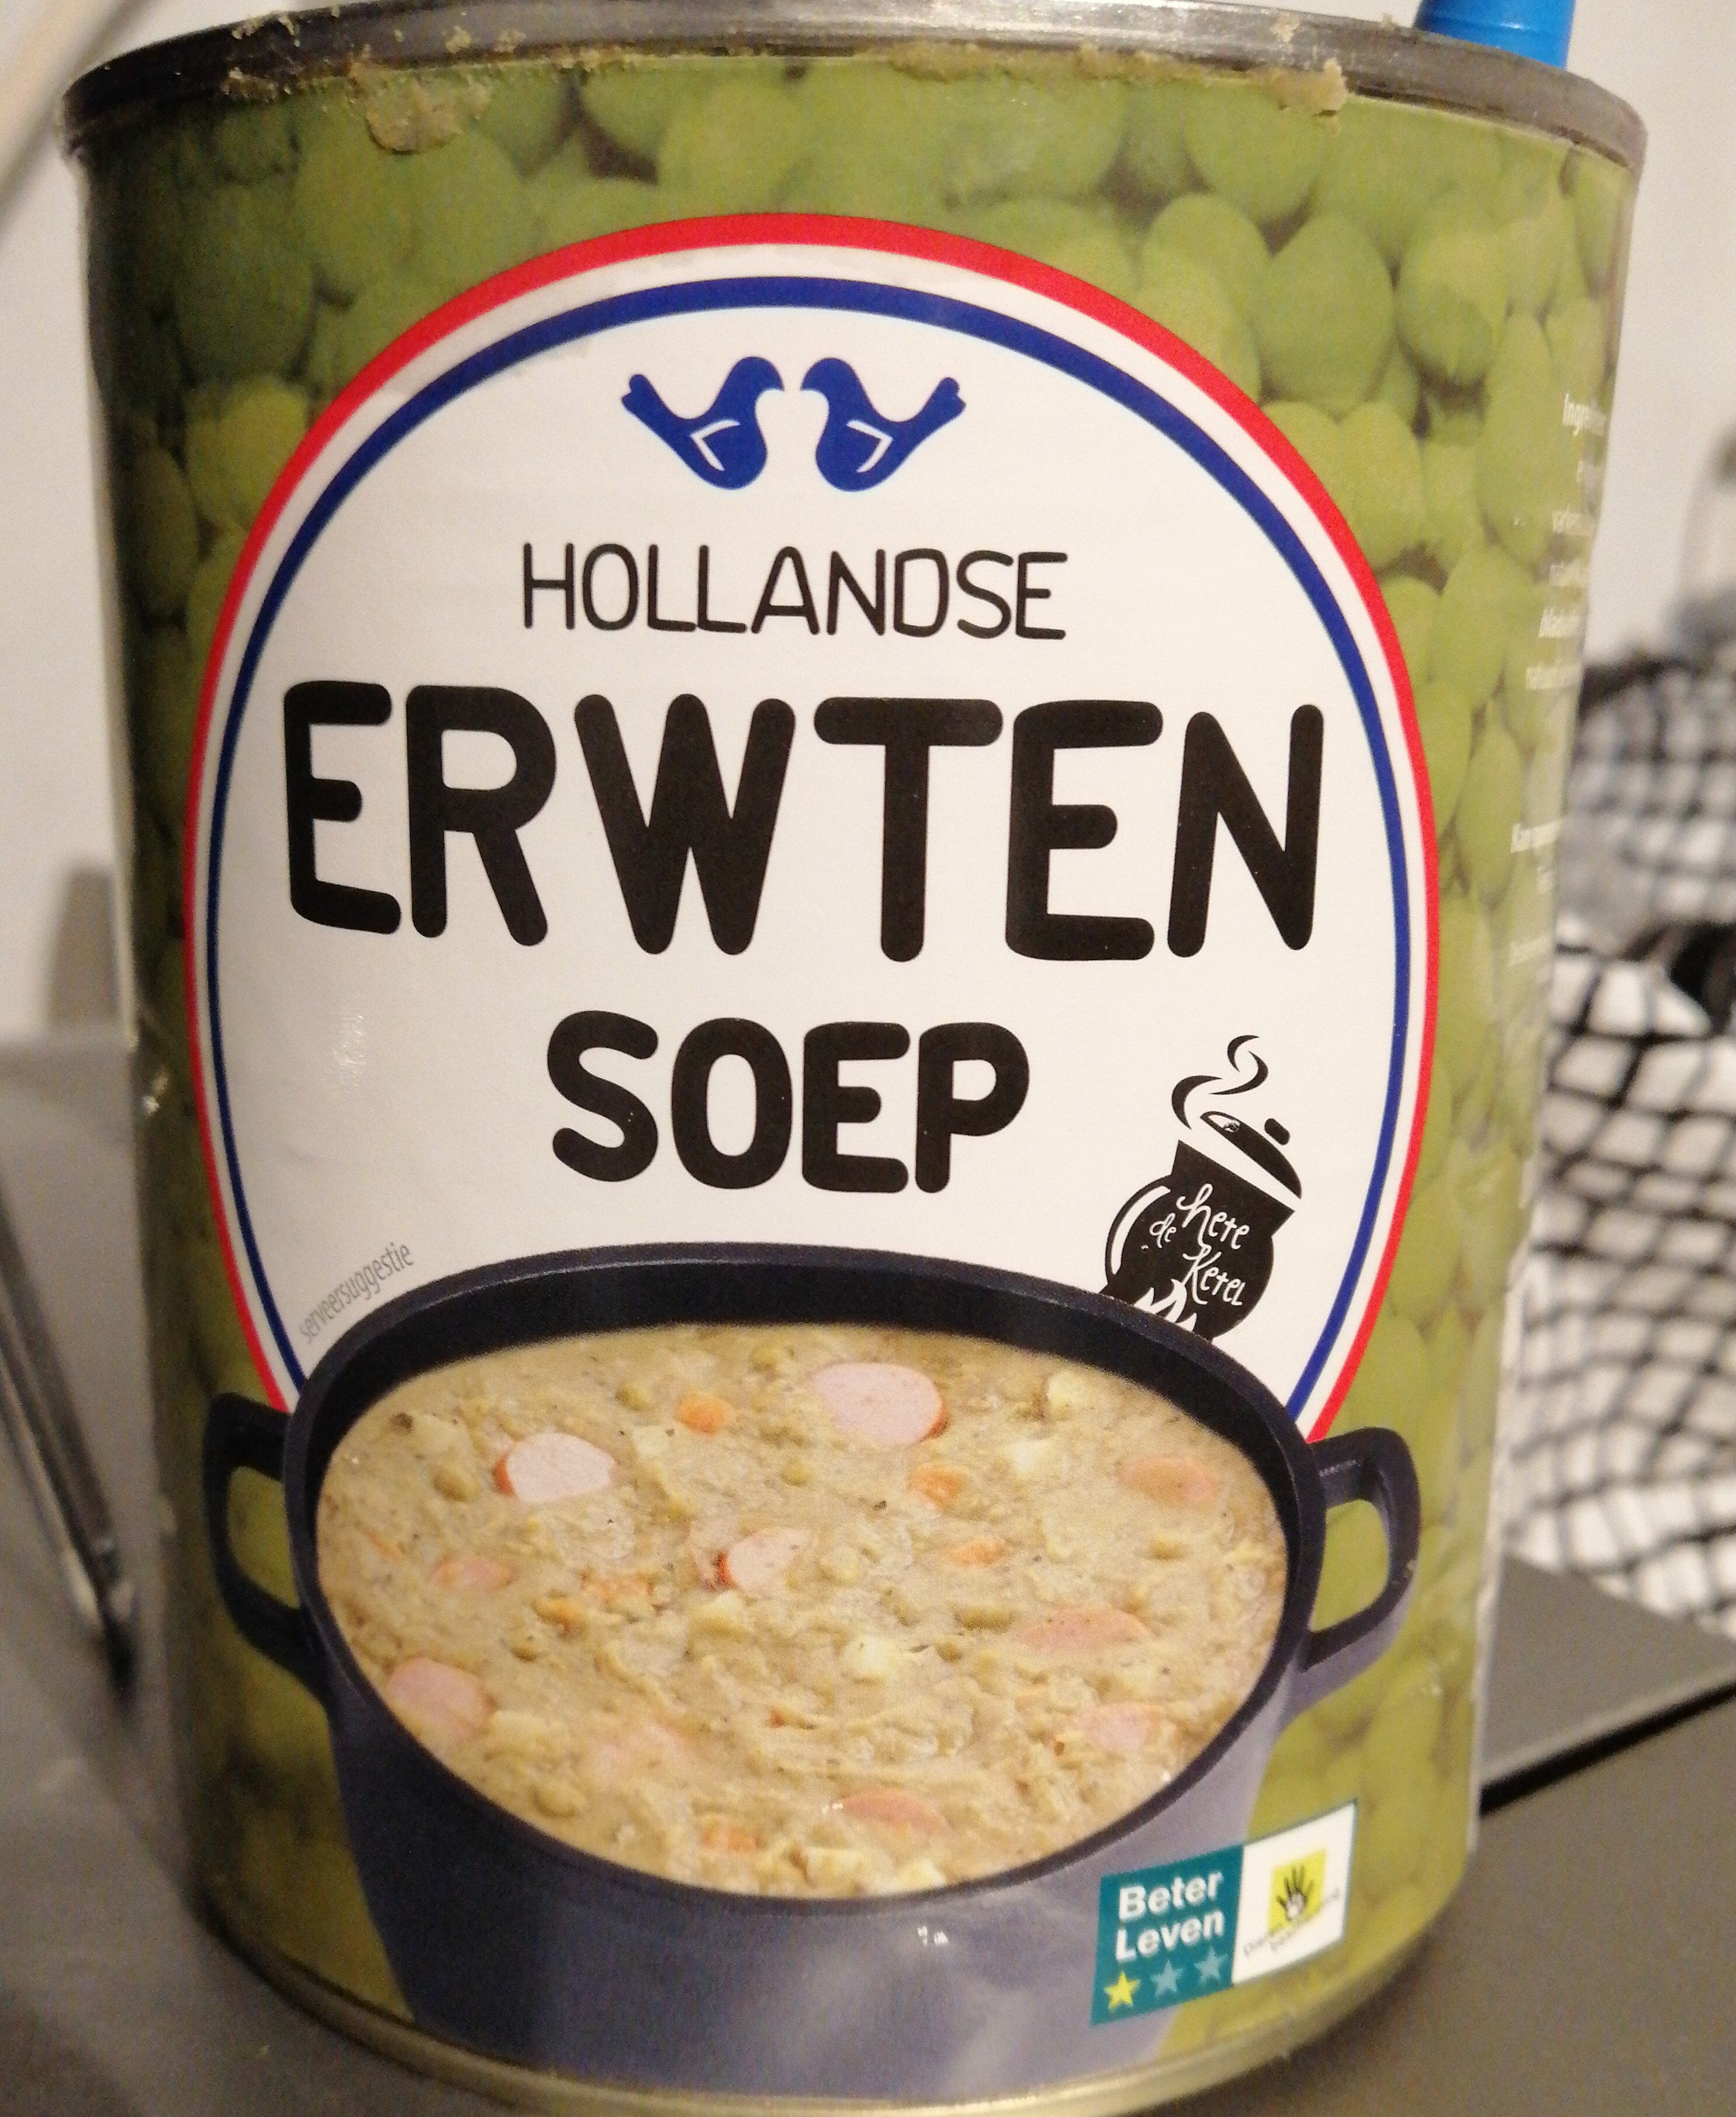 Hollandse erwten soep - Product